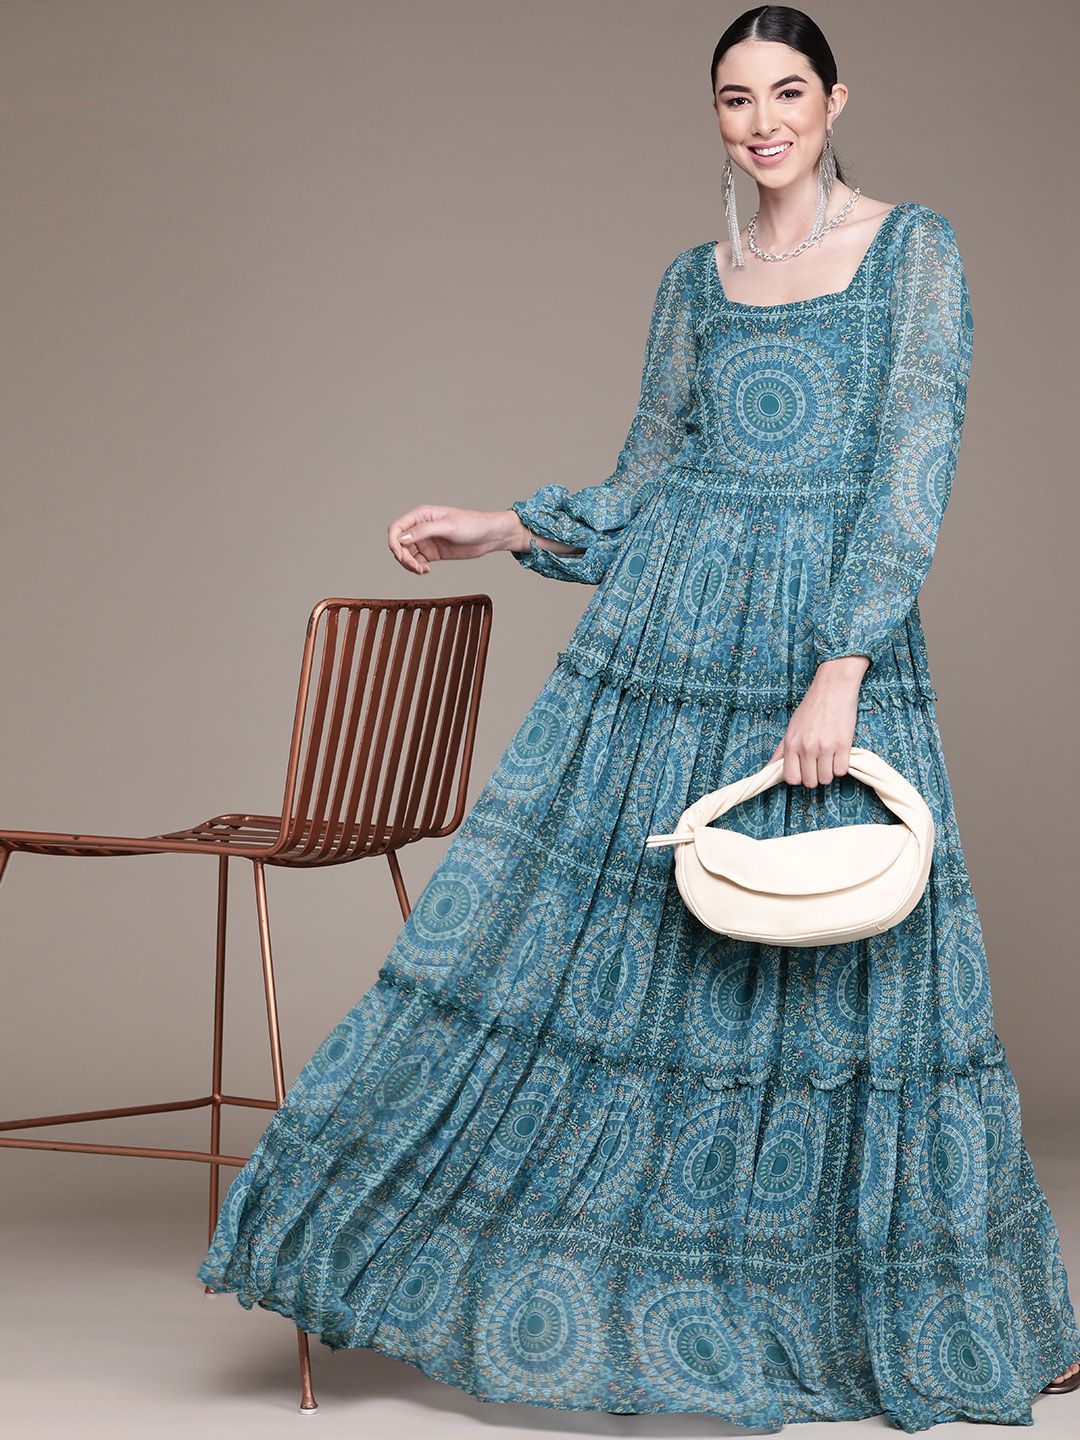 aarke Ritu Kumar Women Blue & Beige Ethnic Motifs Printed Georgette Maxi Dress Price in India